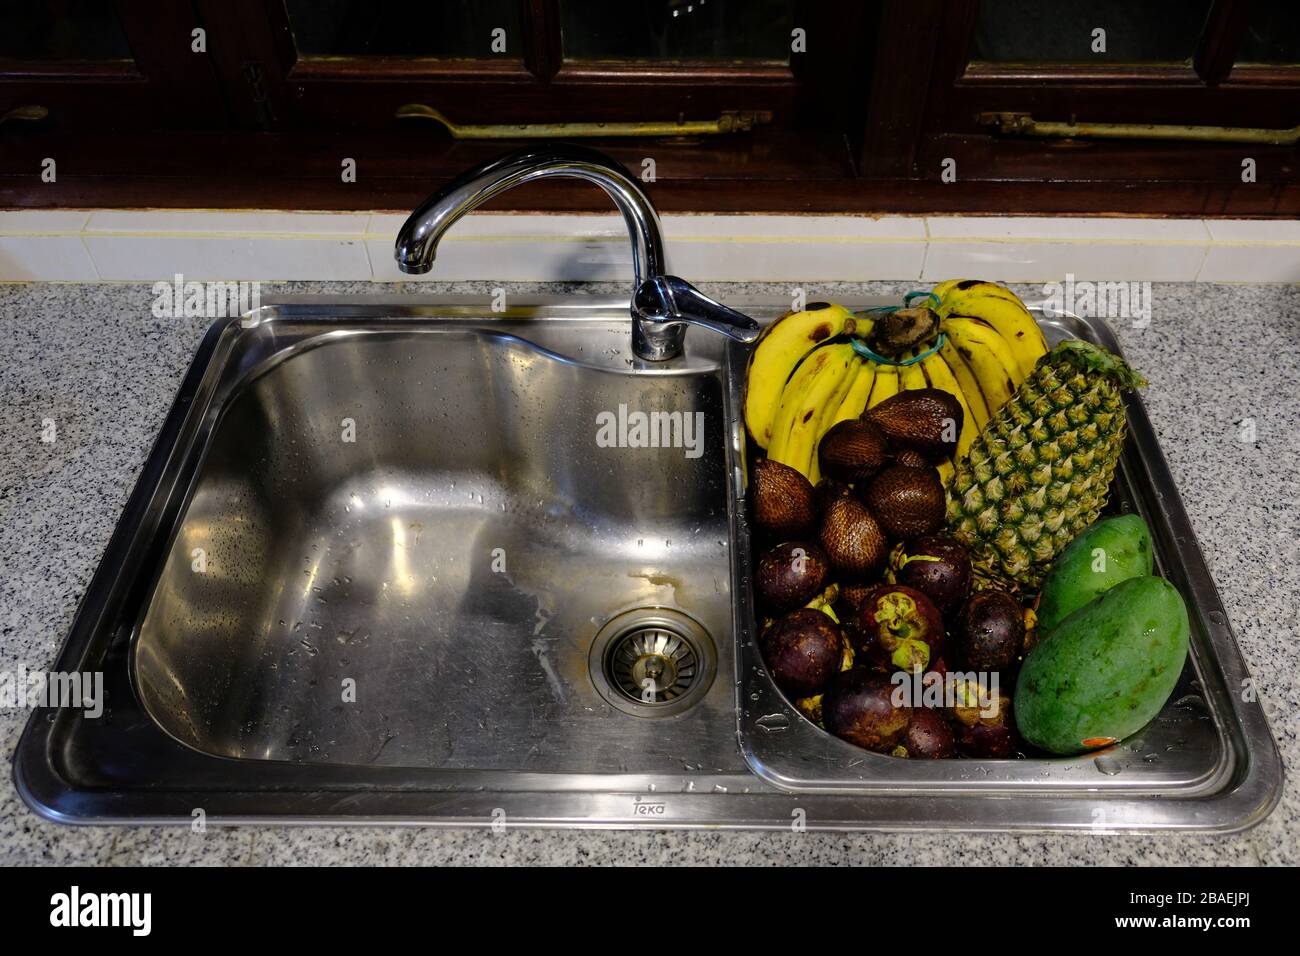 Batam Island Indonesia - local frueits in the kitchen sink Stock Photo